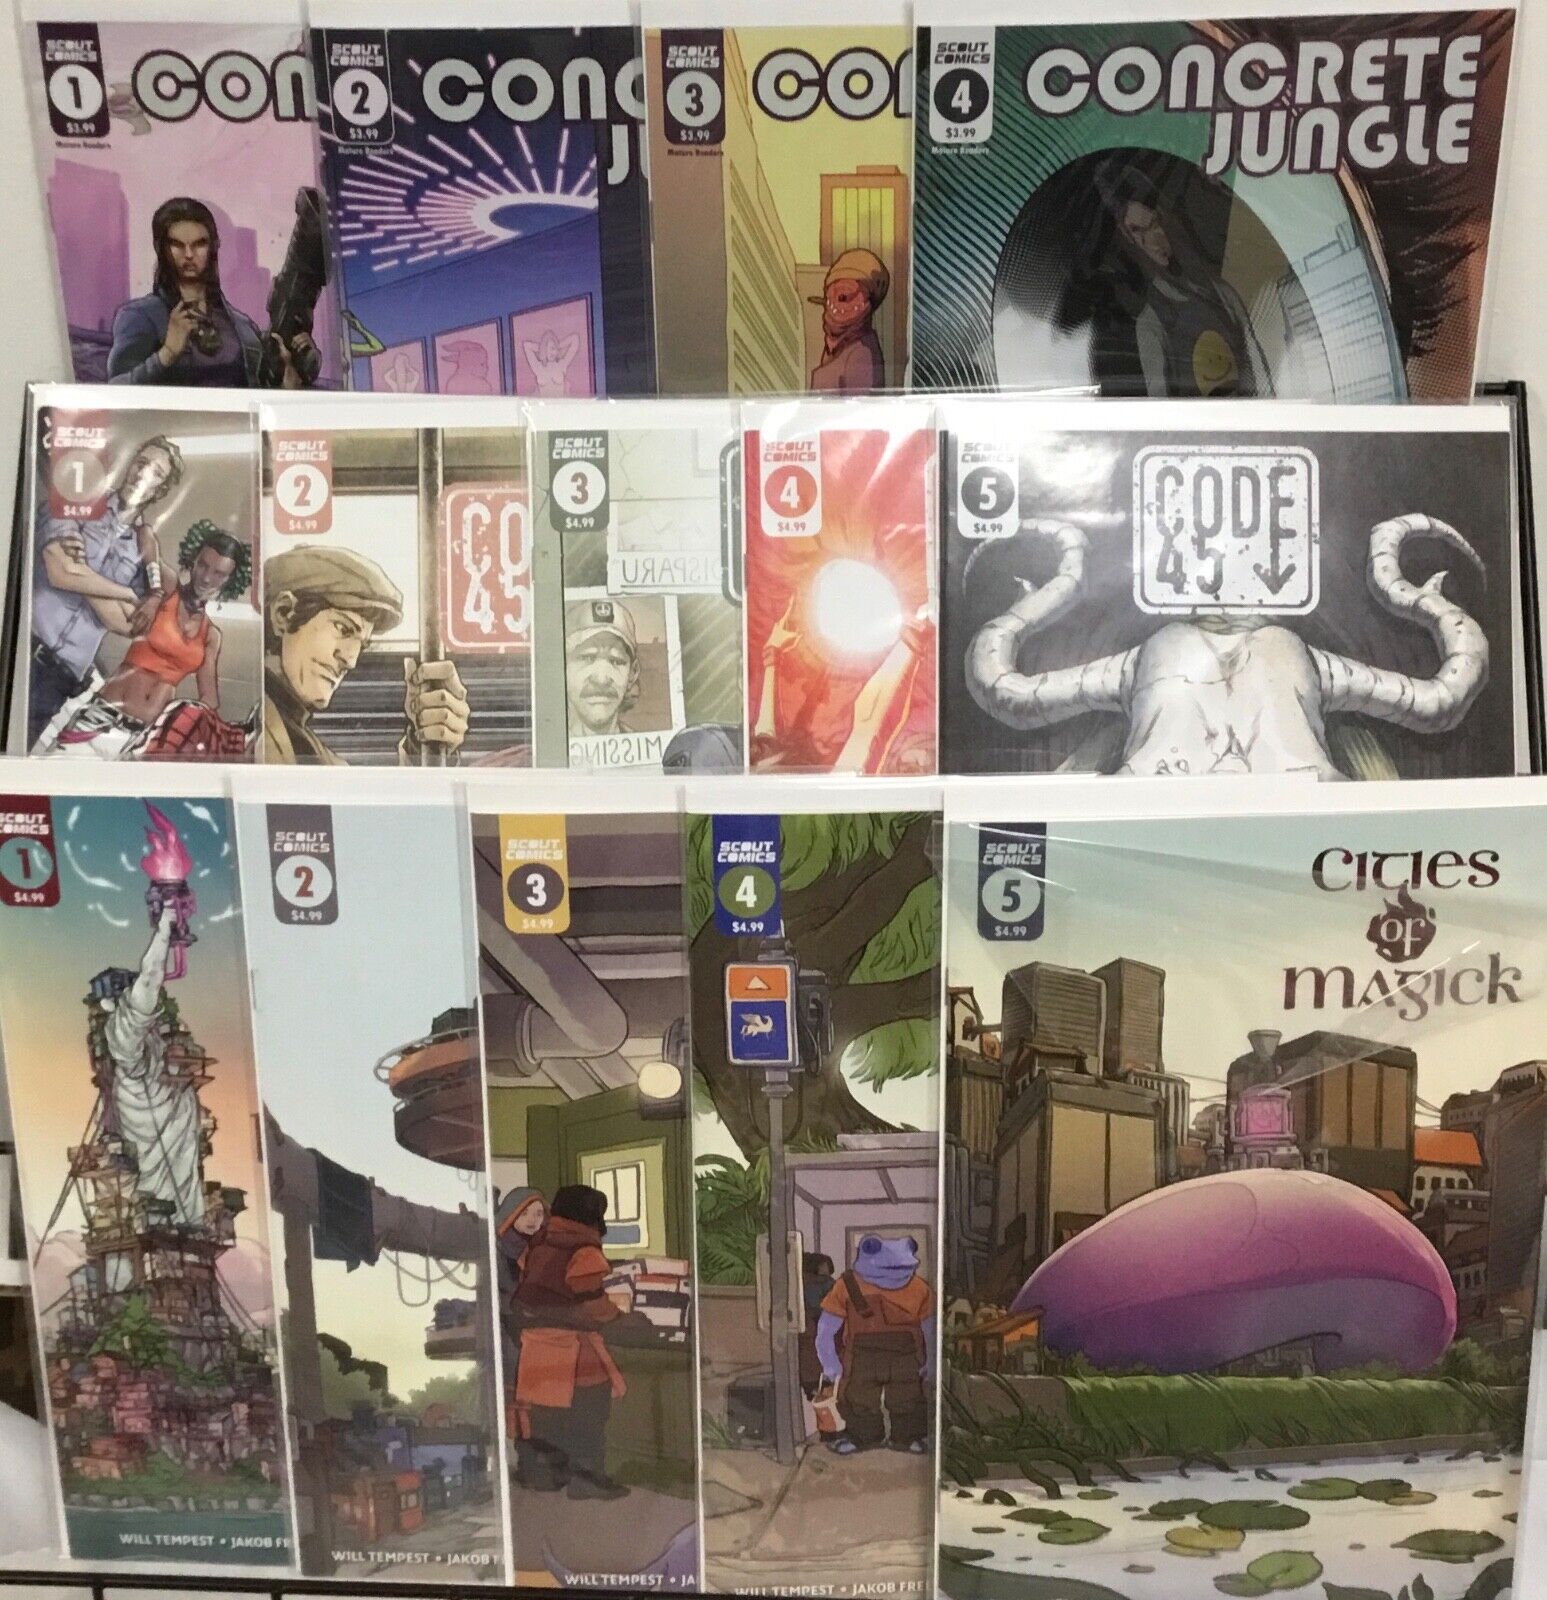 Scout Comics Concrete Jungle 1-4, Code 45 1-5, Cities of Magick 1-5